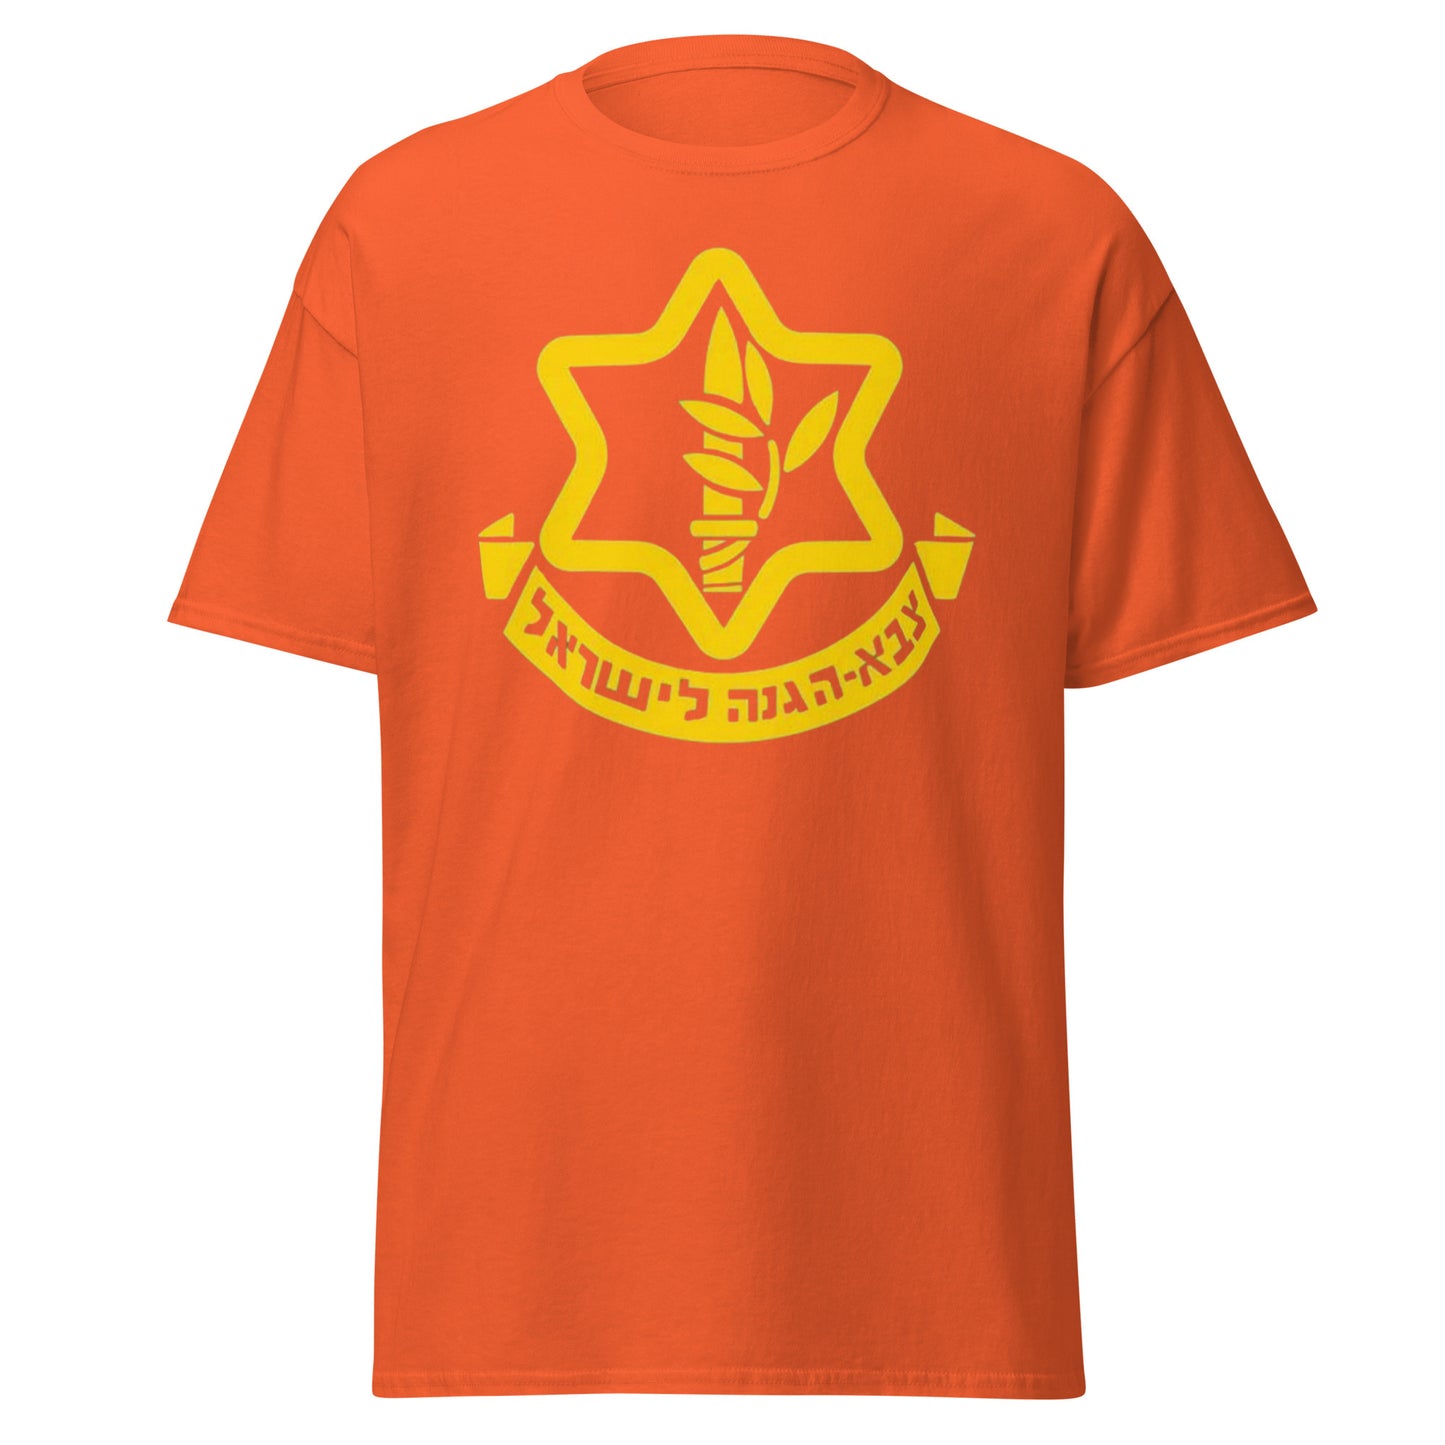 Israeli Defense Forces tee shirt